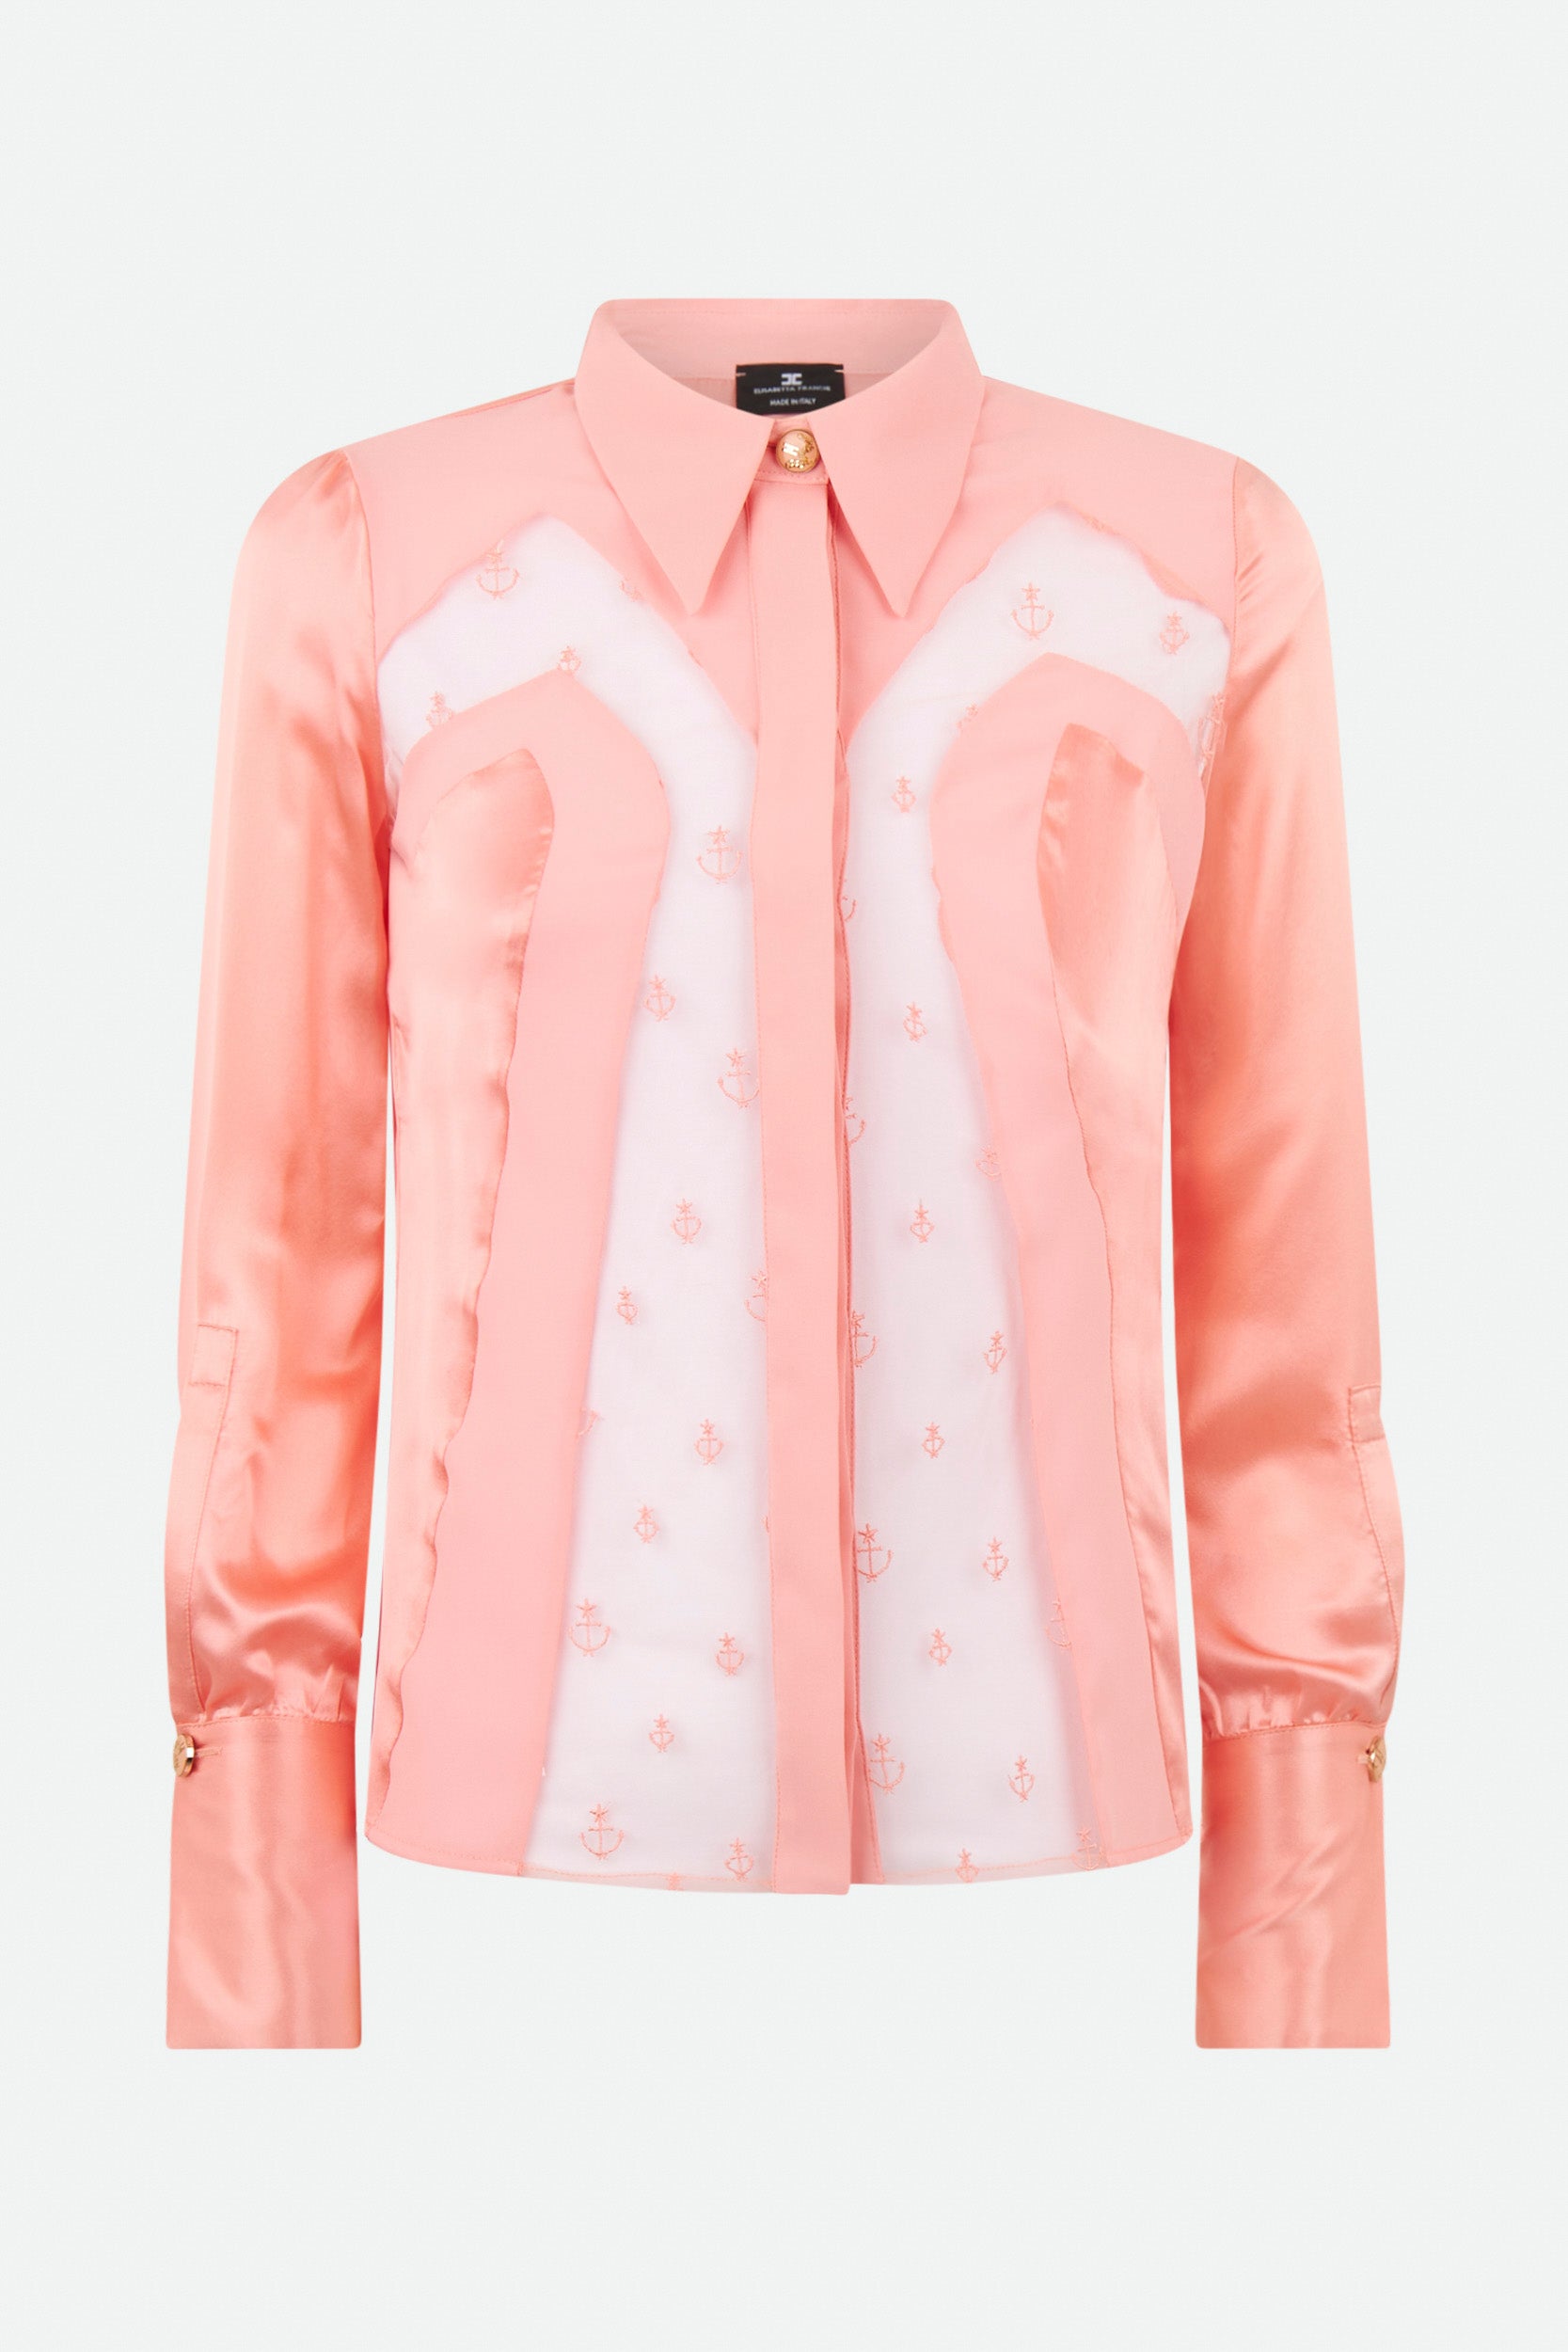 Elisabetta Franchi Pink Shirt